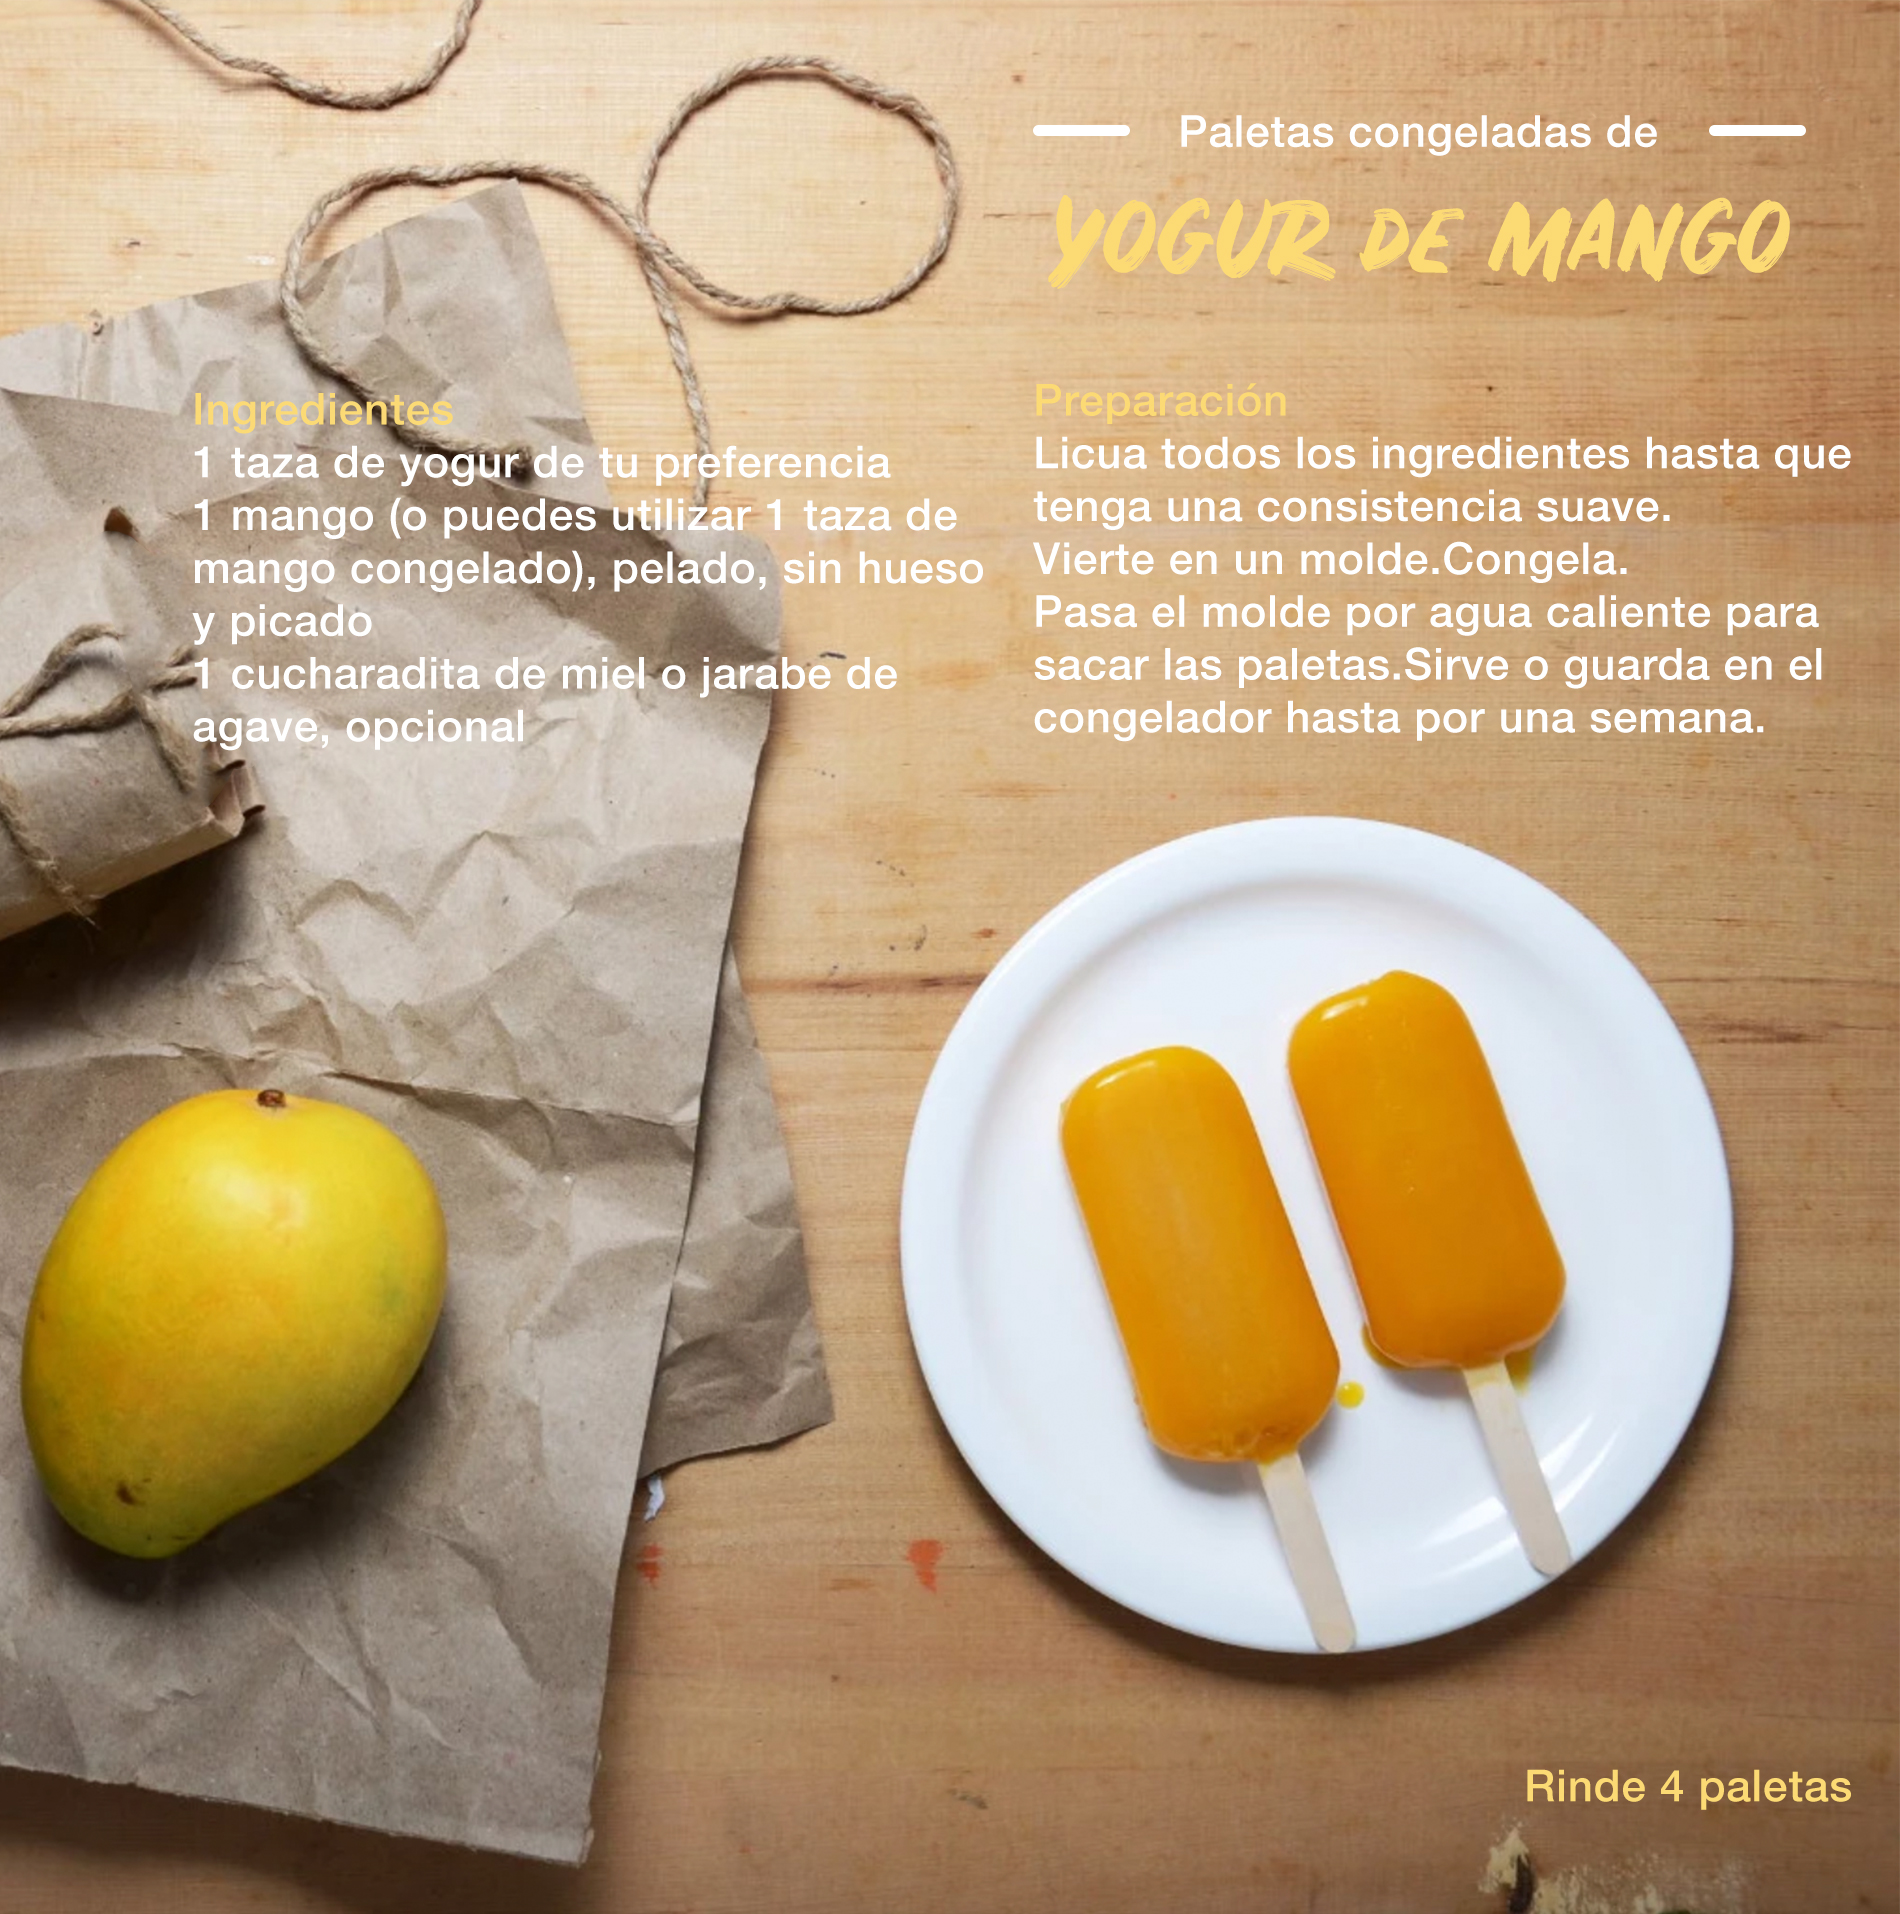 Paletas congeladas de yogur de mango